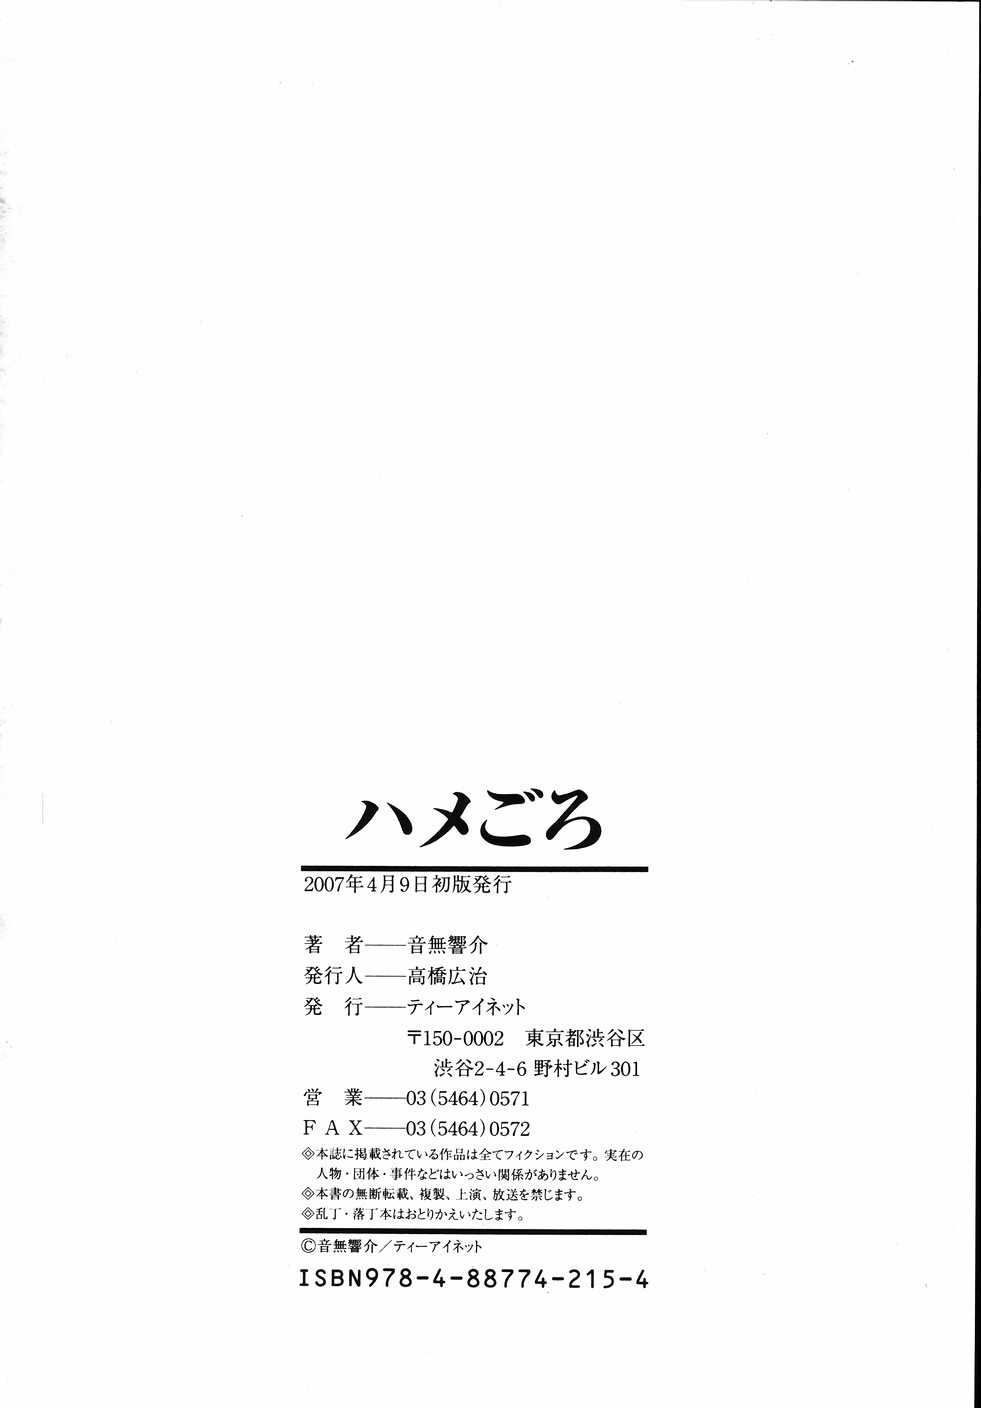 About Hame by Otomashi Kyosuke 